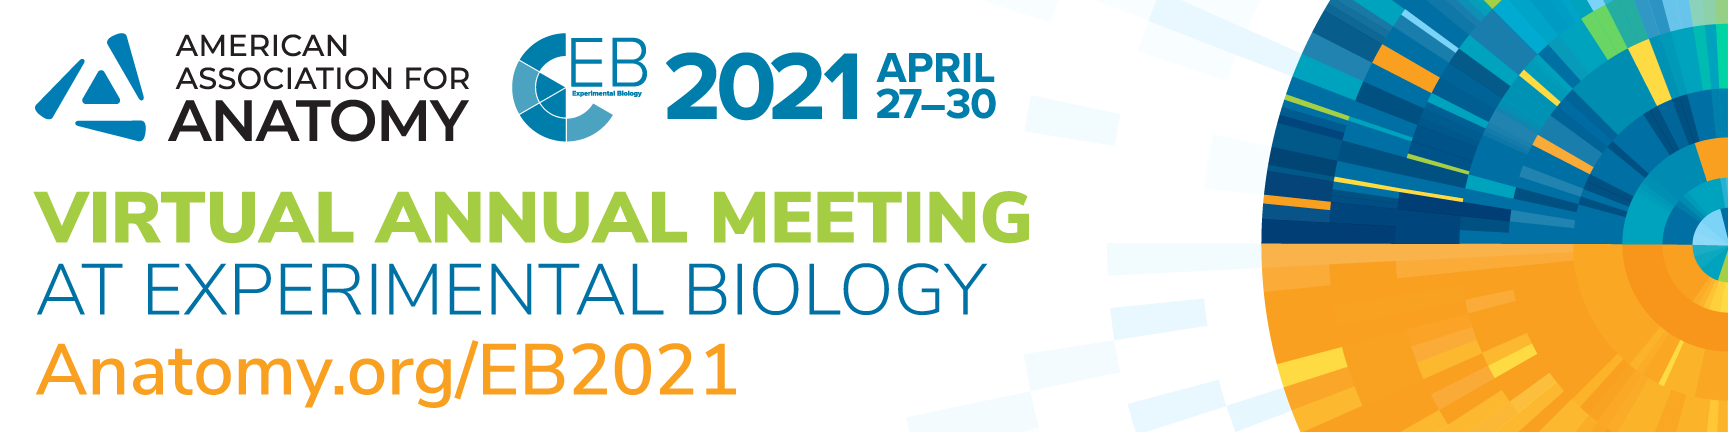 Annual Meeting at Experimental Biology 2021, April 27-30